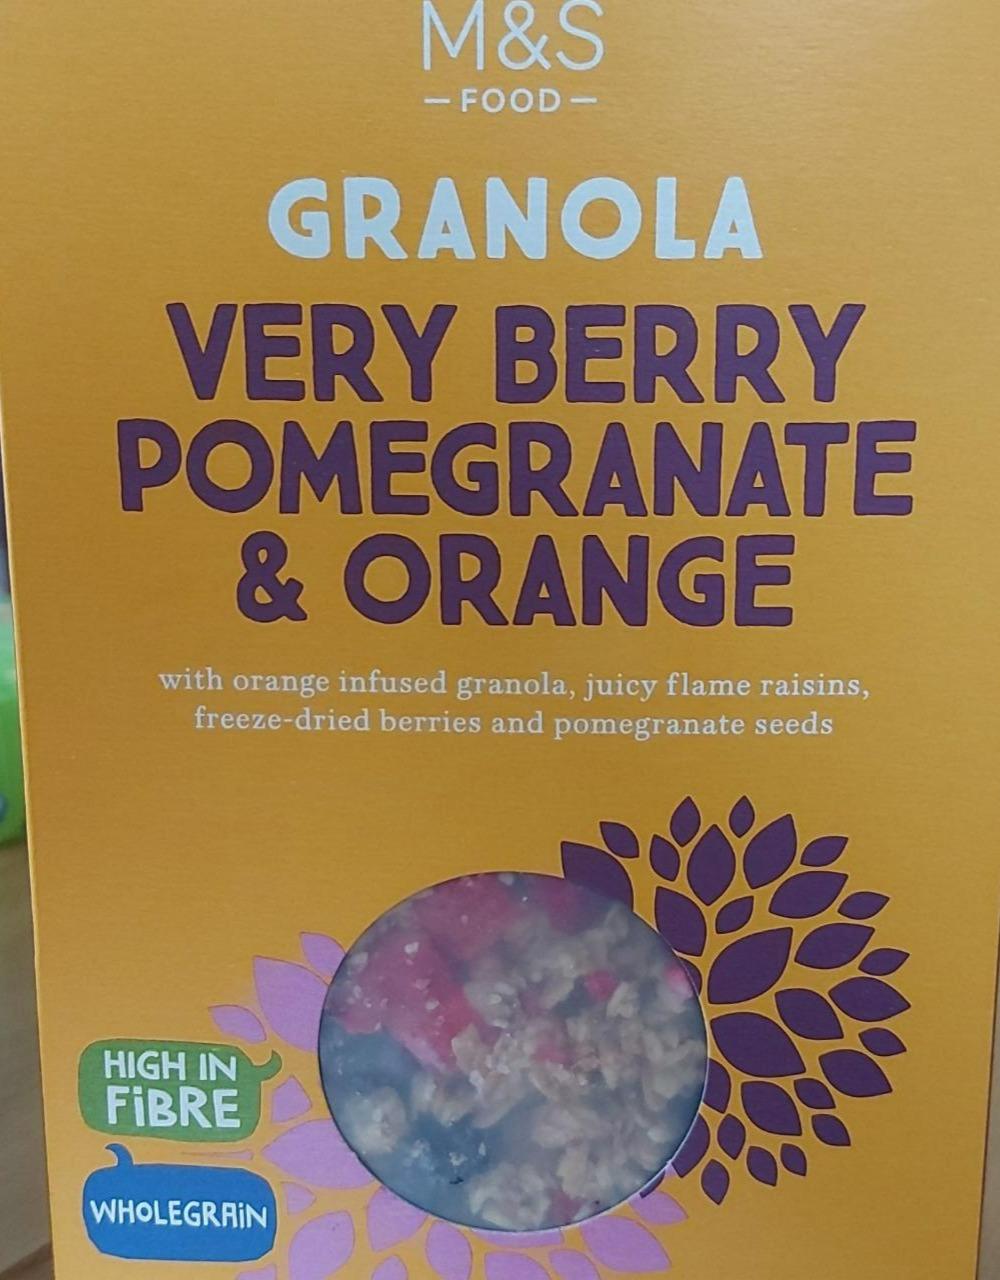 Fotografie - Granola Very berry pomegranate & orange M&S Food